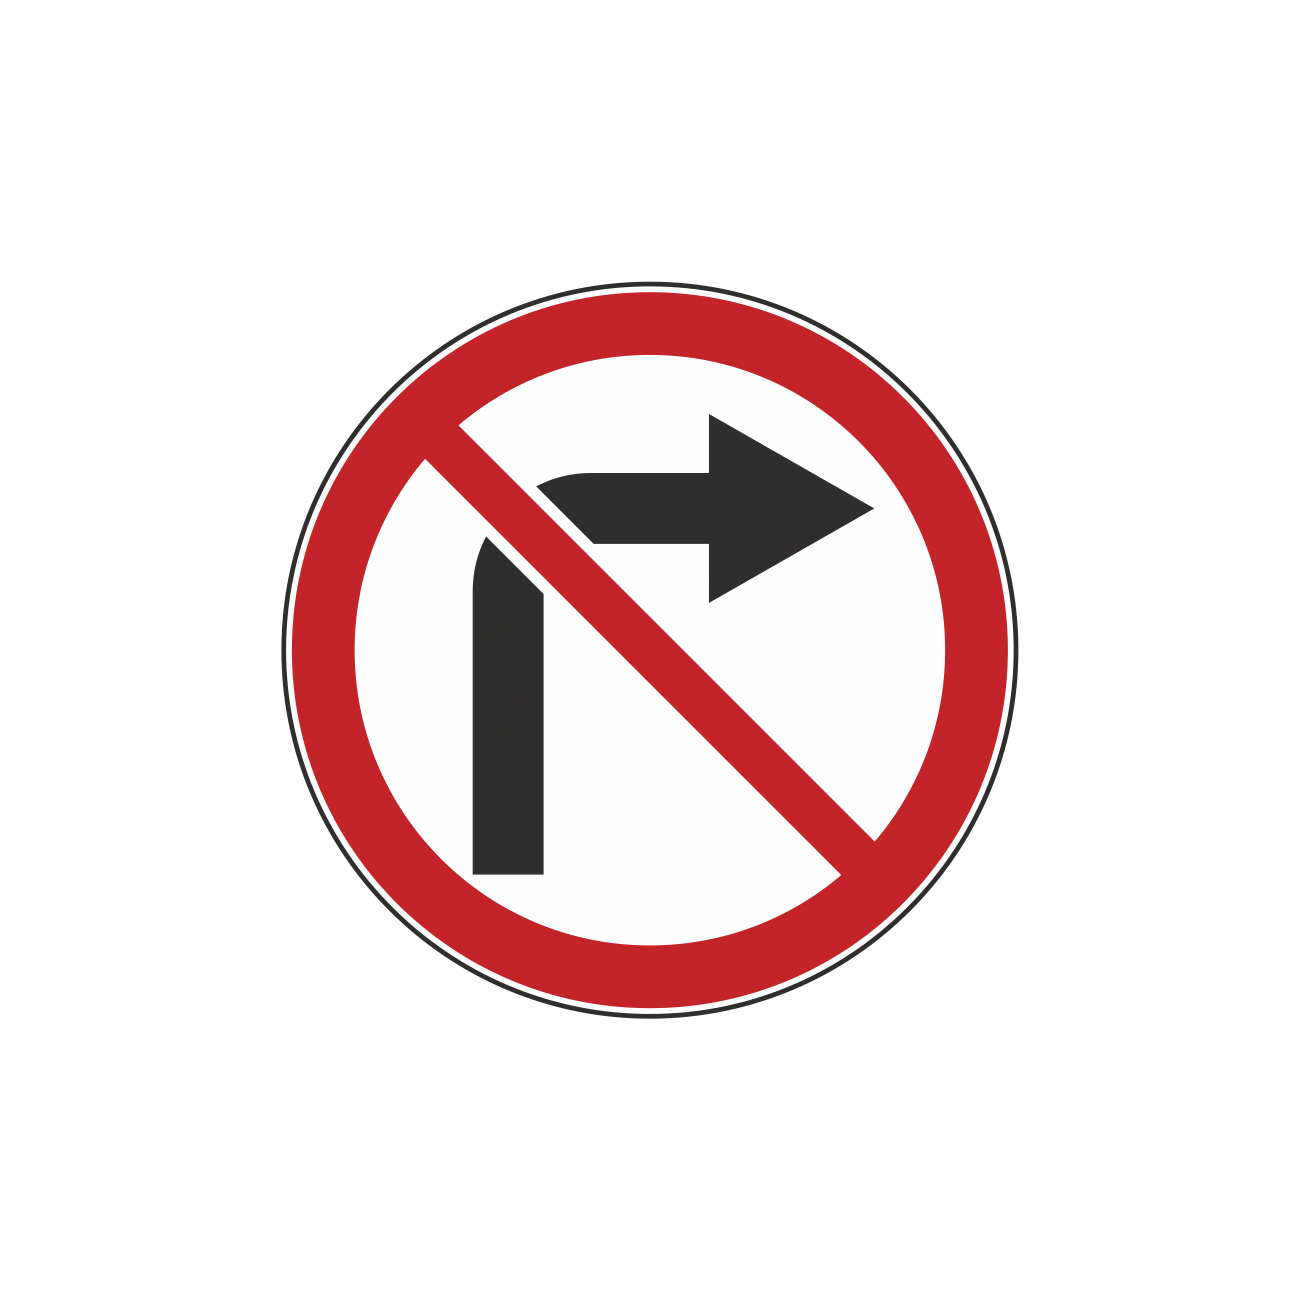 Знак запрещающий движение налево. Запрещающие знаки поворот направо запрещен. Знак поворот направо запрещен. Дорожный знак поворот. Знак 3.18.1.